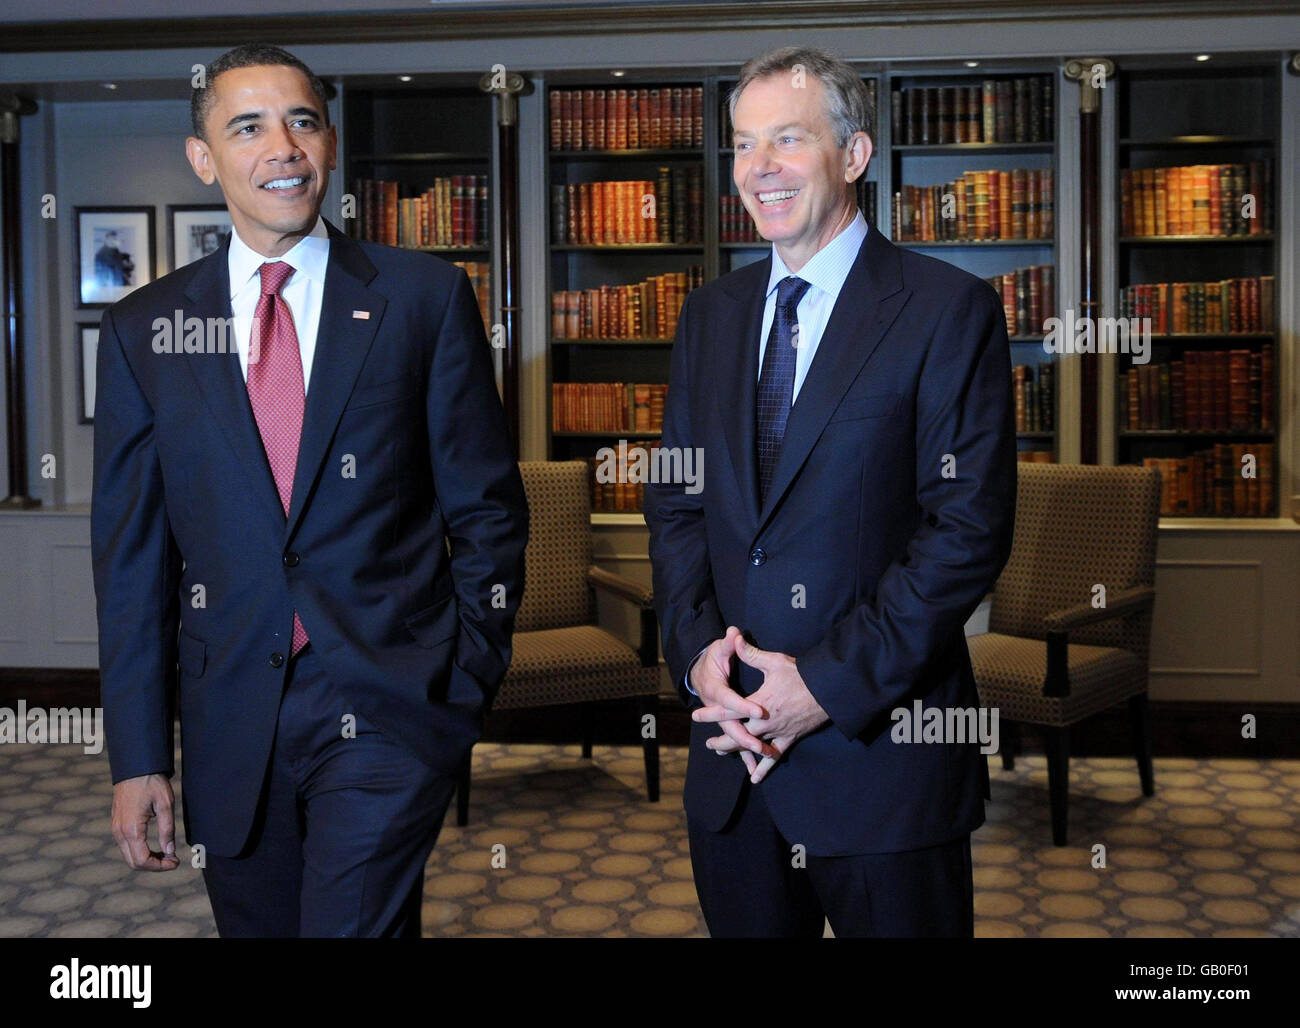 US senator Barack Obama meets with former British Prime Minister Tony Blair in London. Stock Photo